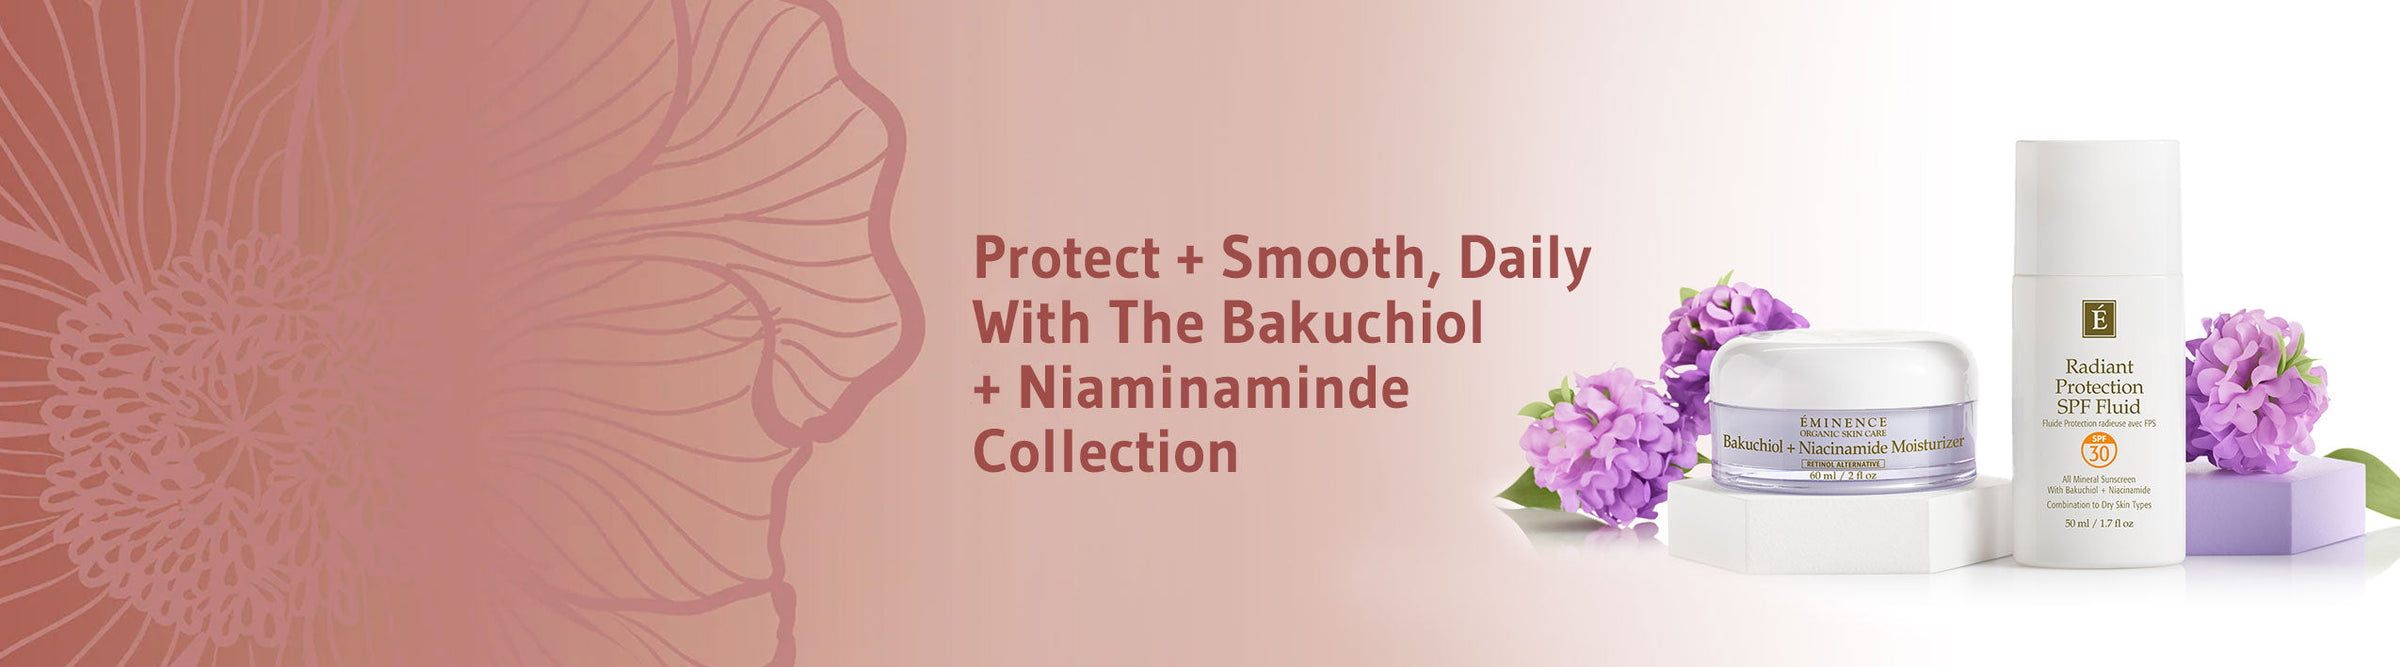 Eminence Organics Bakuchiol + Niacinamide Collection